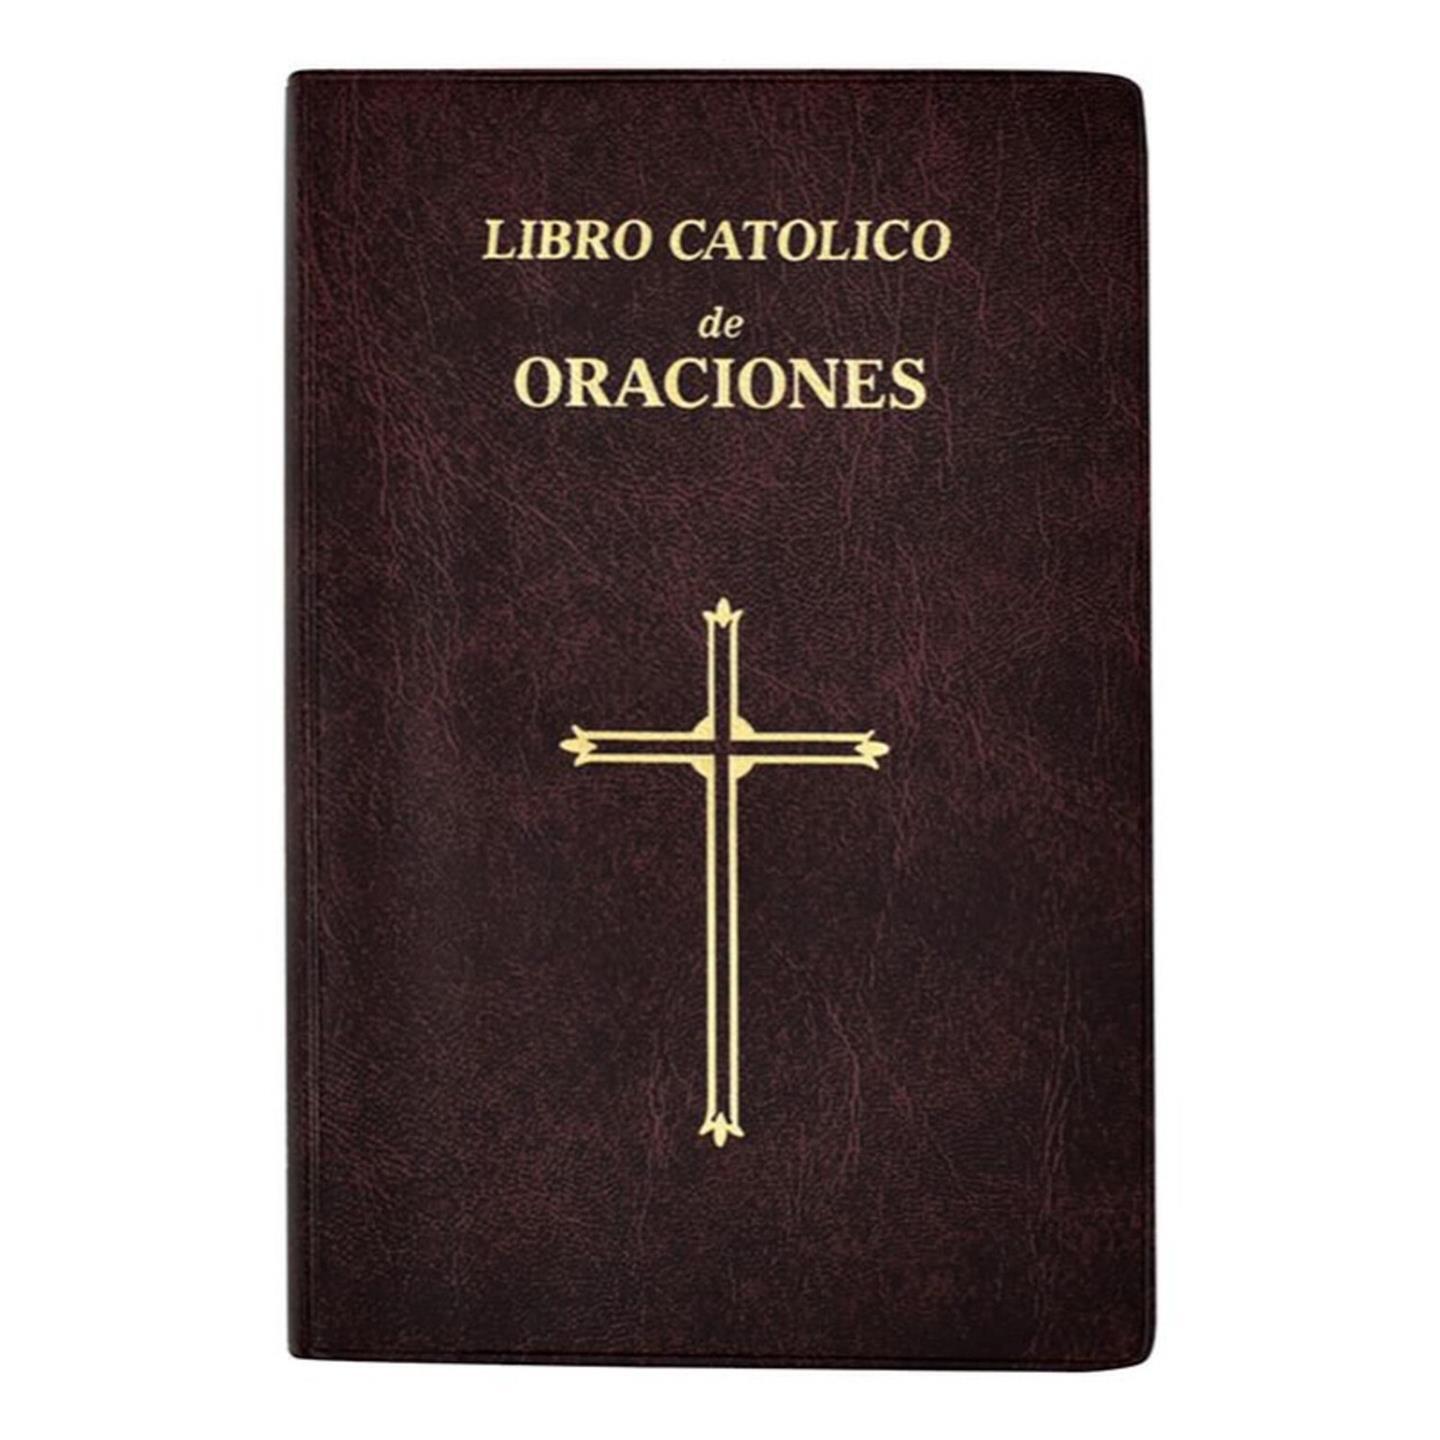 Libro Catolico De Oraciones (Catholic Book of Prayers)M:velvetS:4x6.25